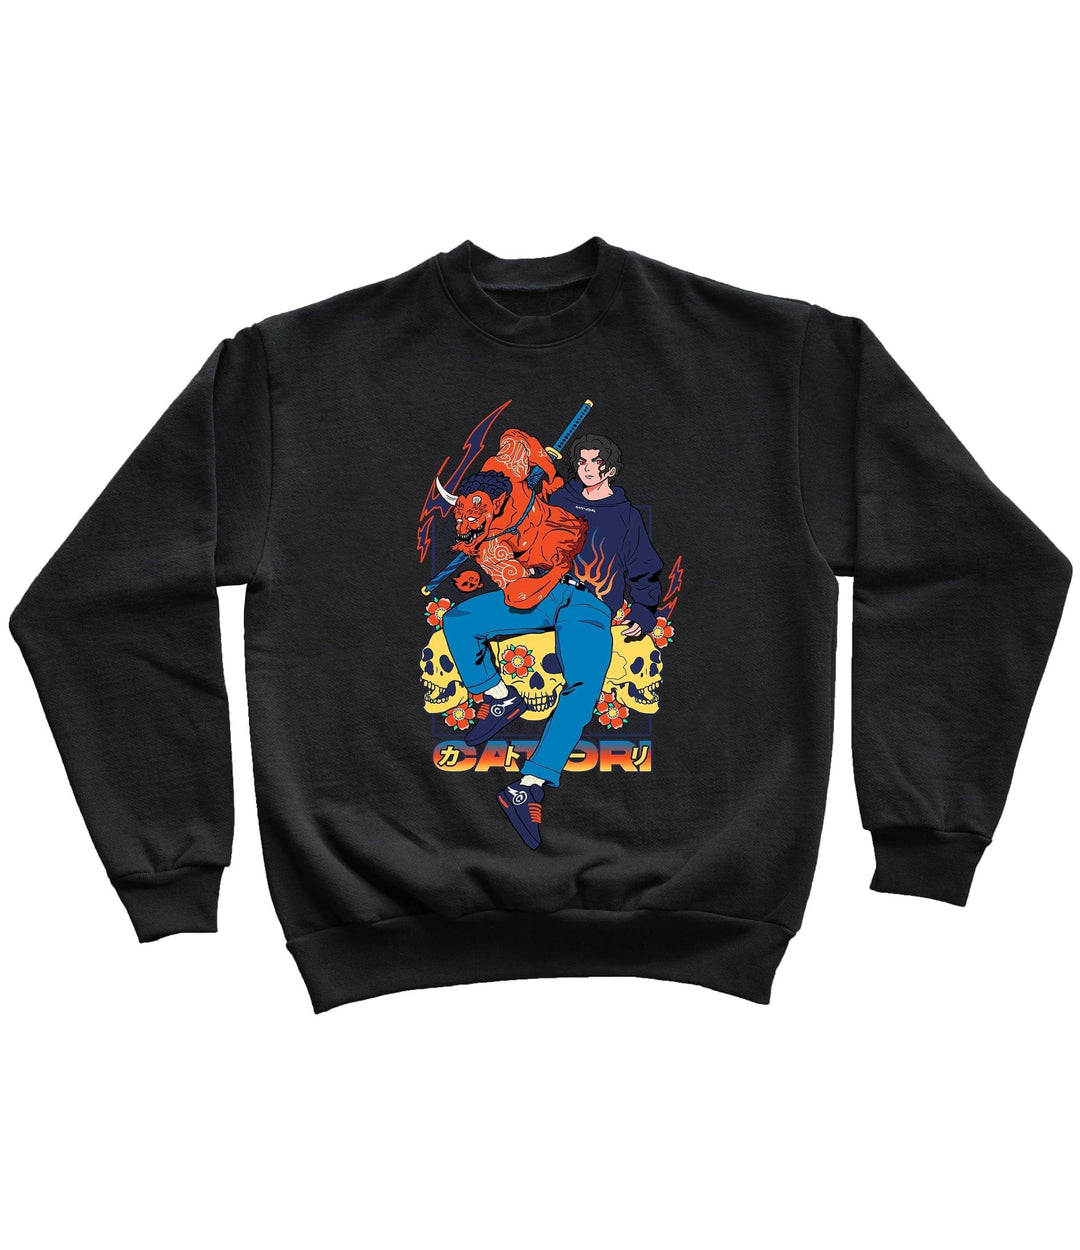 Demon King Sweatshirt at Catori Clothing | Graphic & Anime Tees, Hoodies & Sweatshirts 